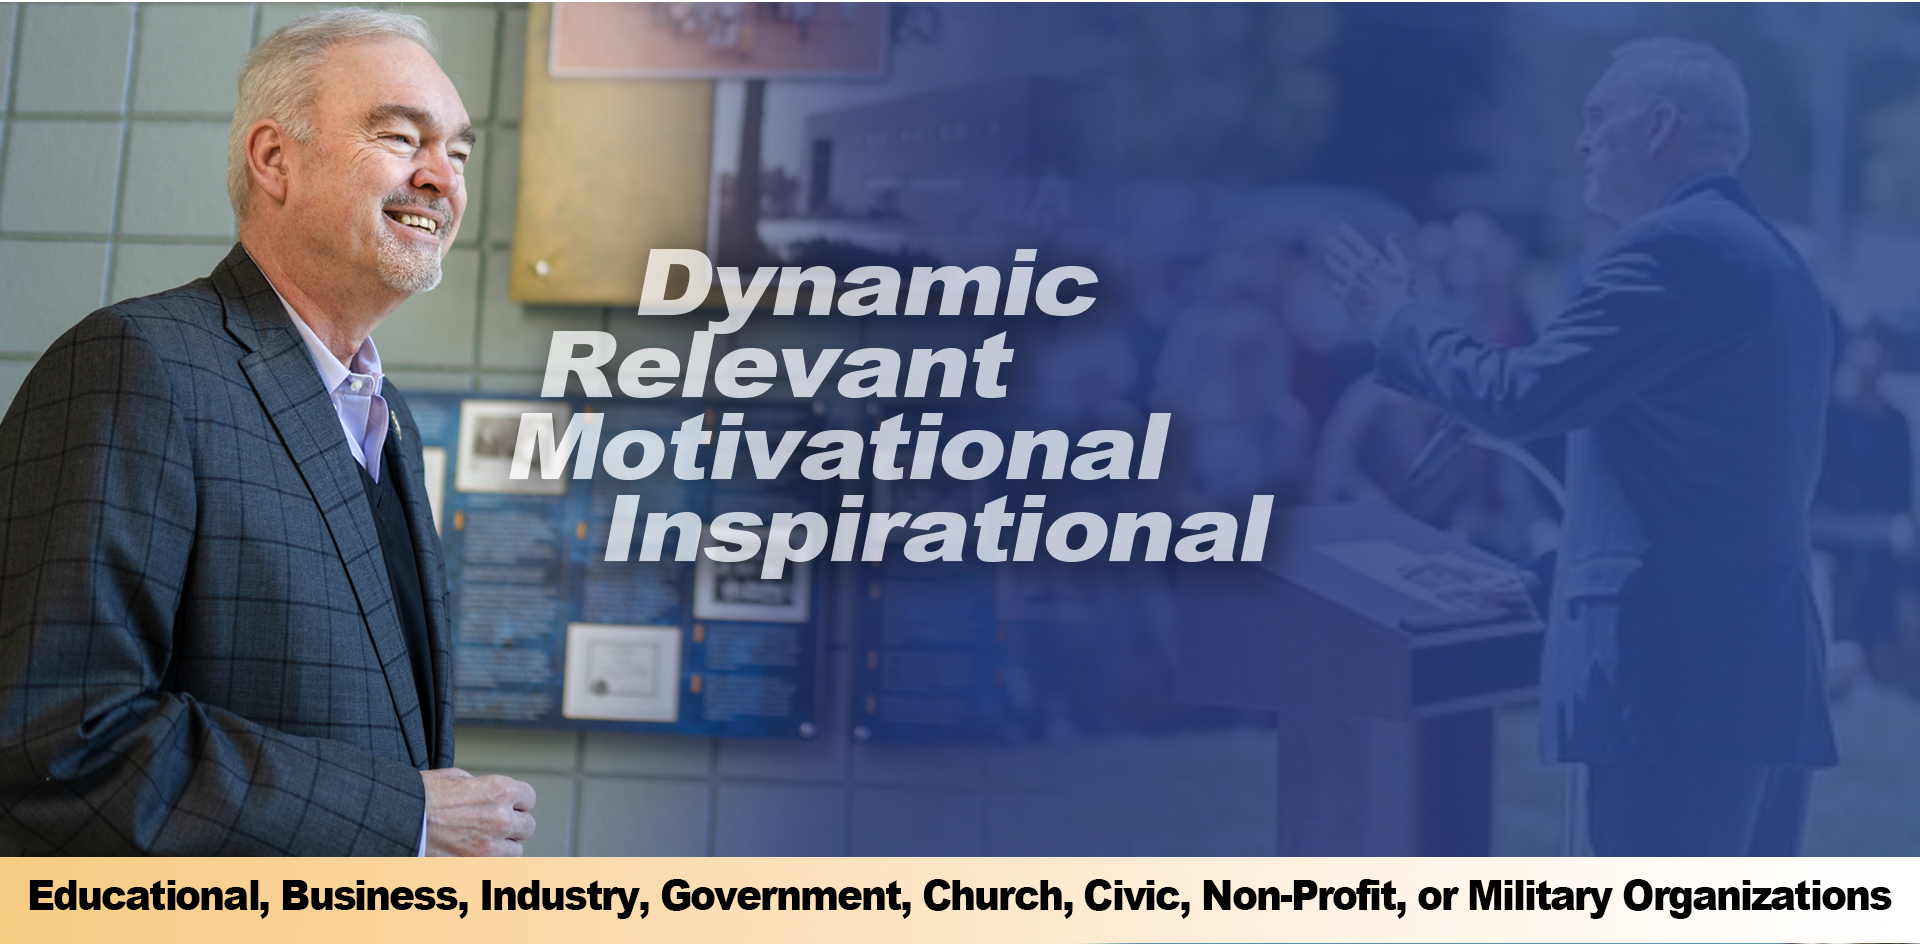 Dynamic, Relevant, Motivational, Inspirational